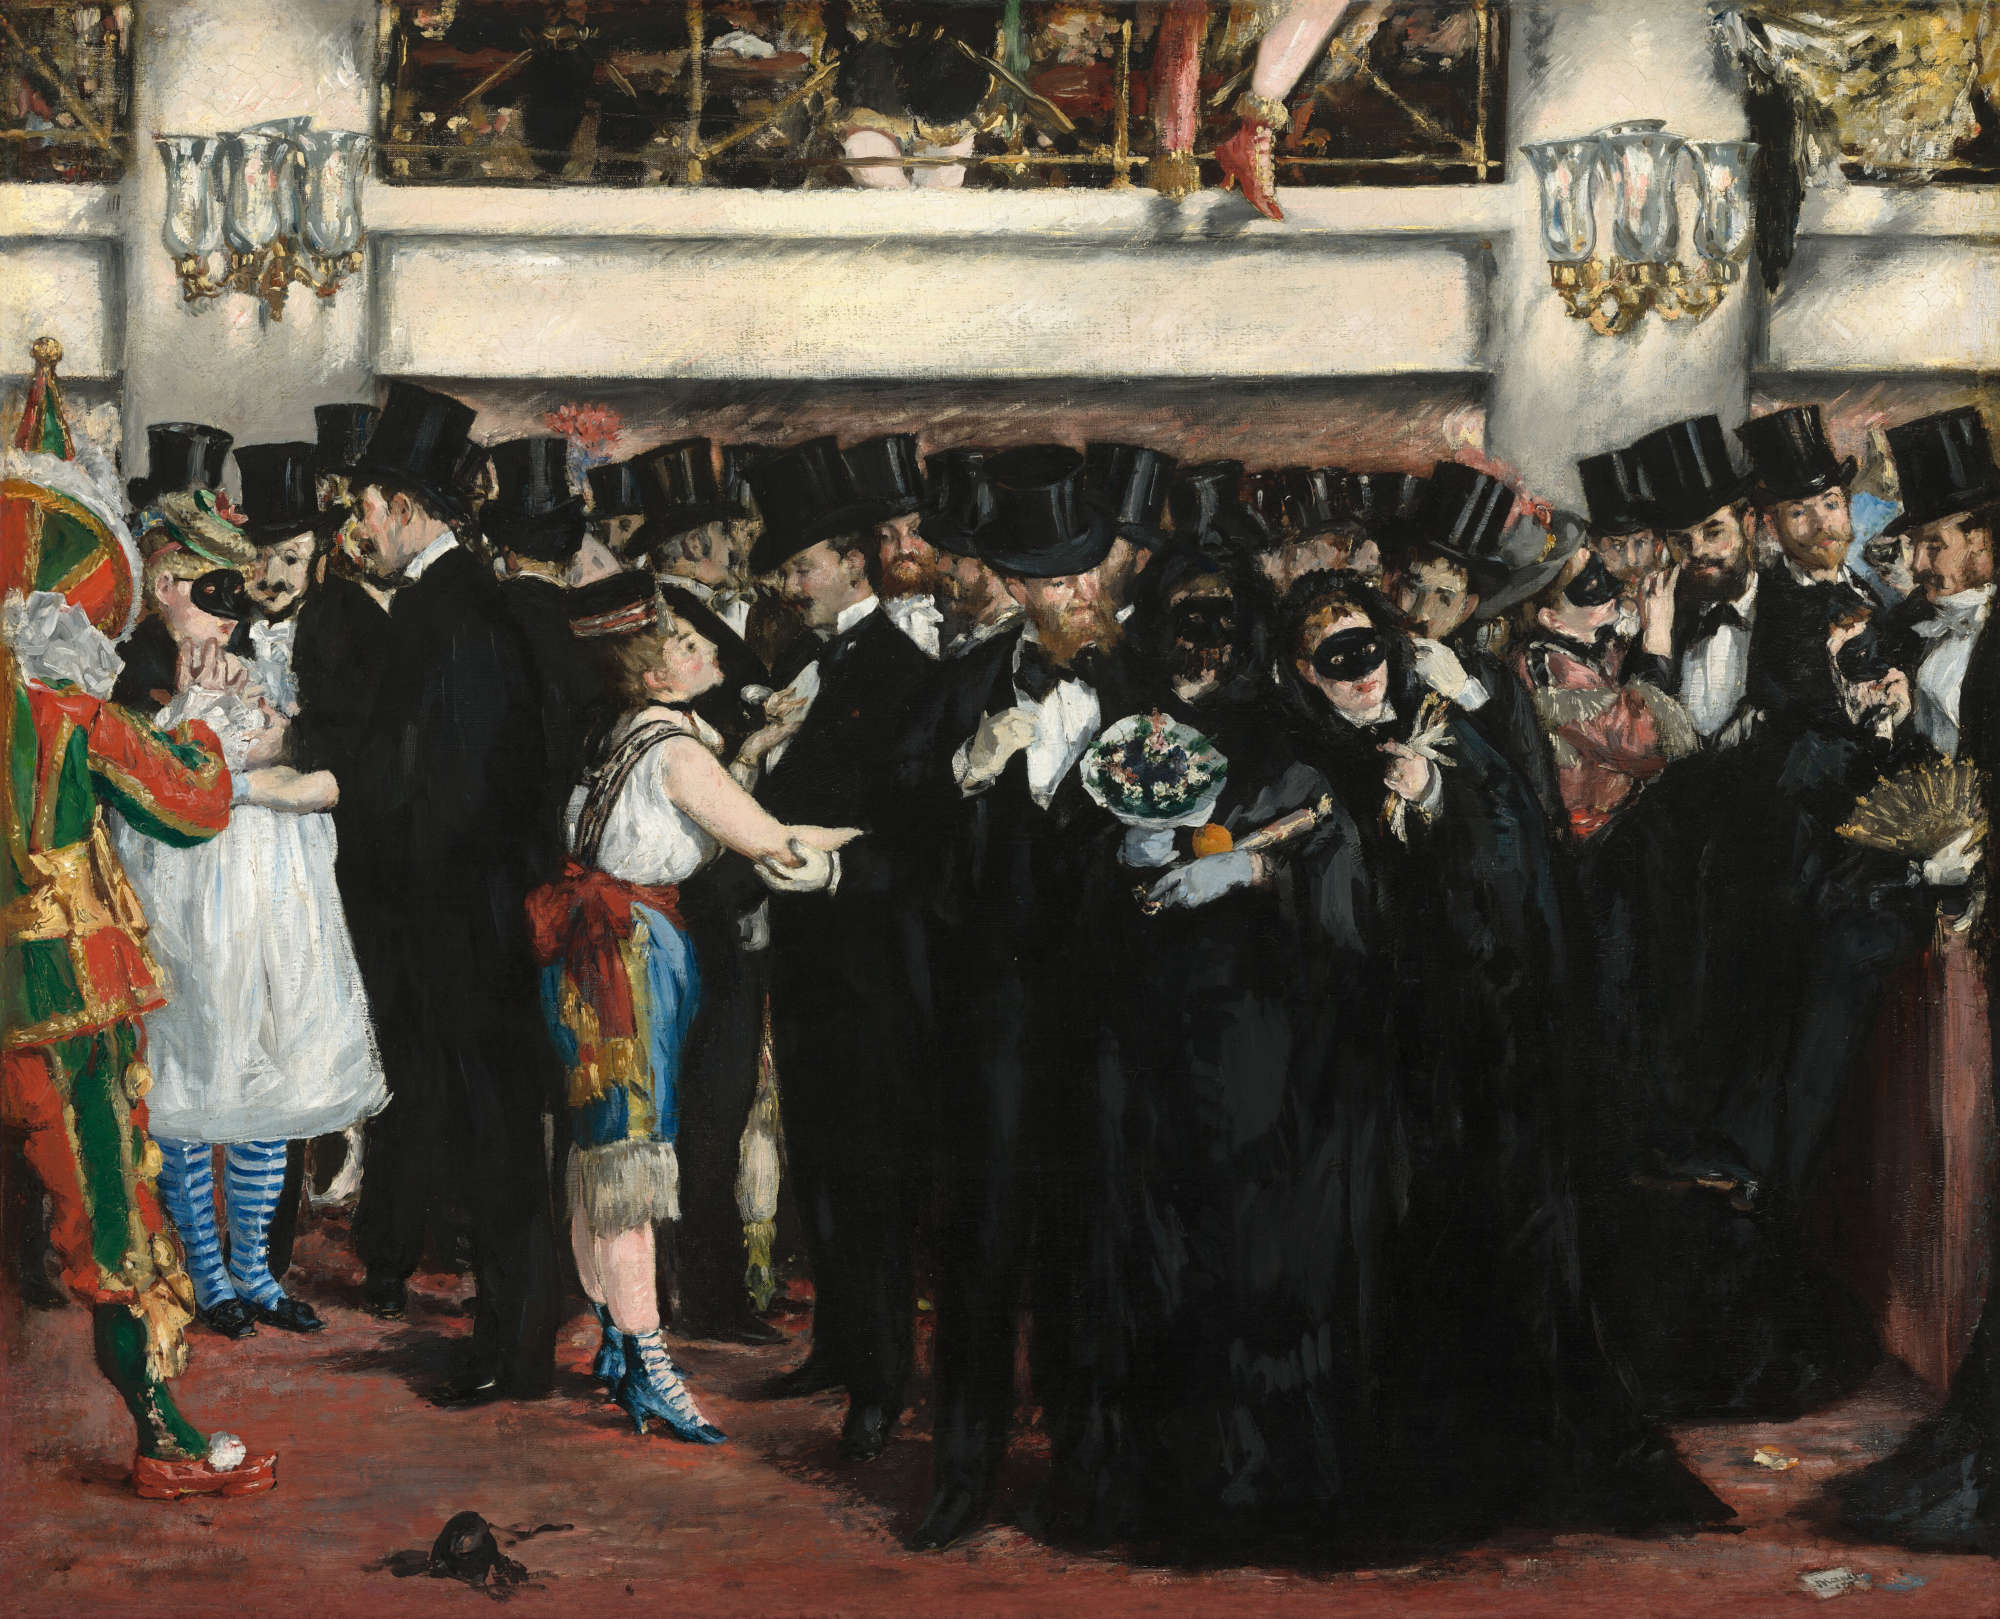 Édouard Manet, Masquerade Ball at the Opéra (1873; oil on canvas, 59.1 x 72.5 cm; Washington, National Gallery of Art)